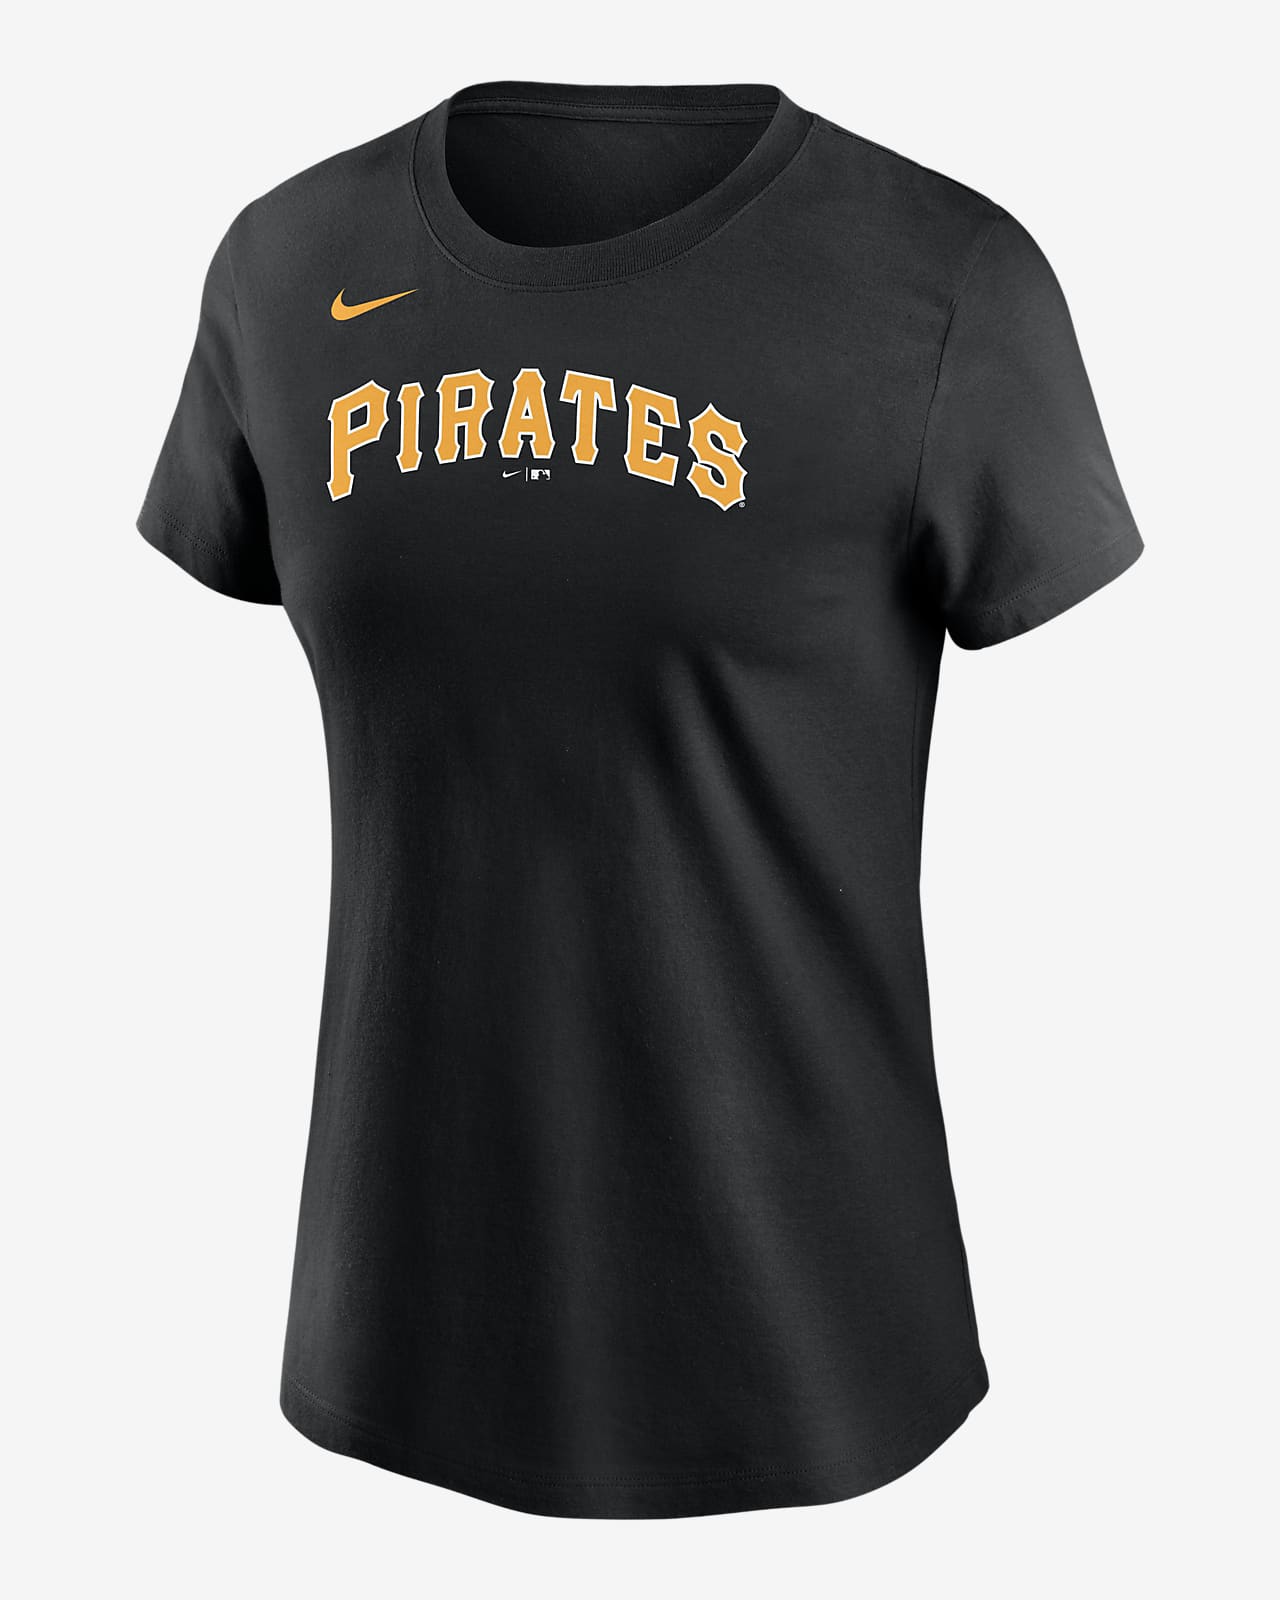 mlb pirates womens shirts